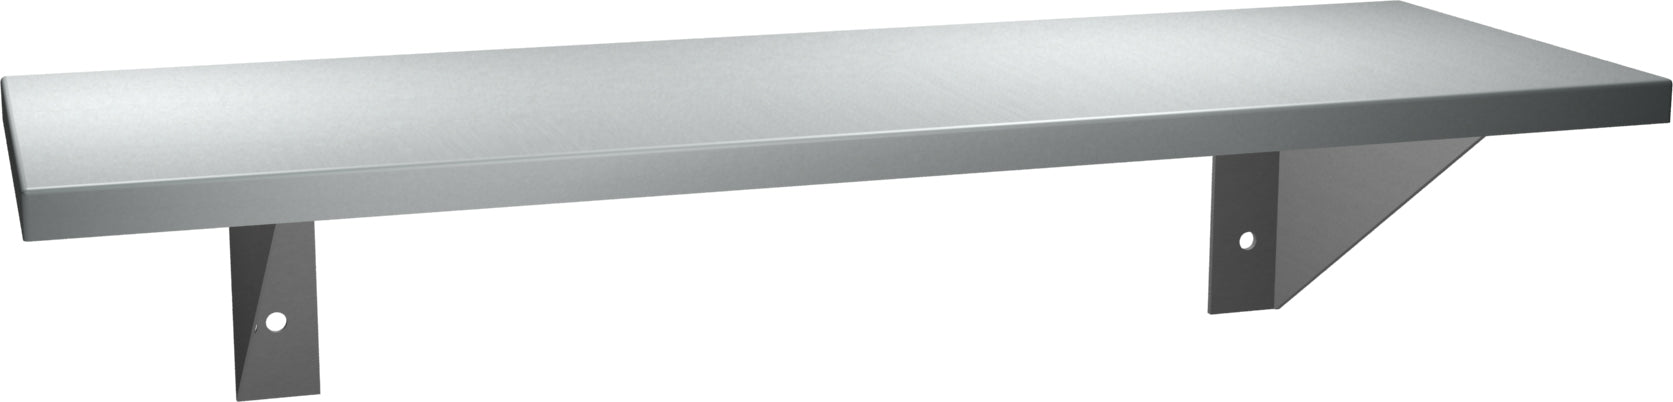 ASI 0692-624 Shelf, Stainless Steel, 6 X 24 Inch